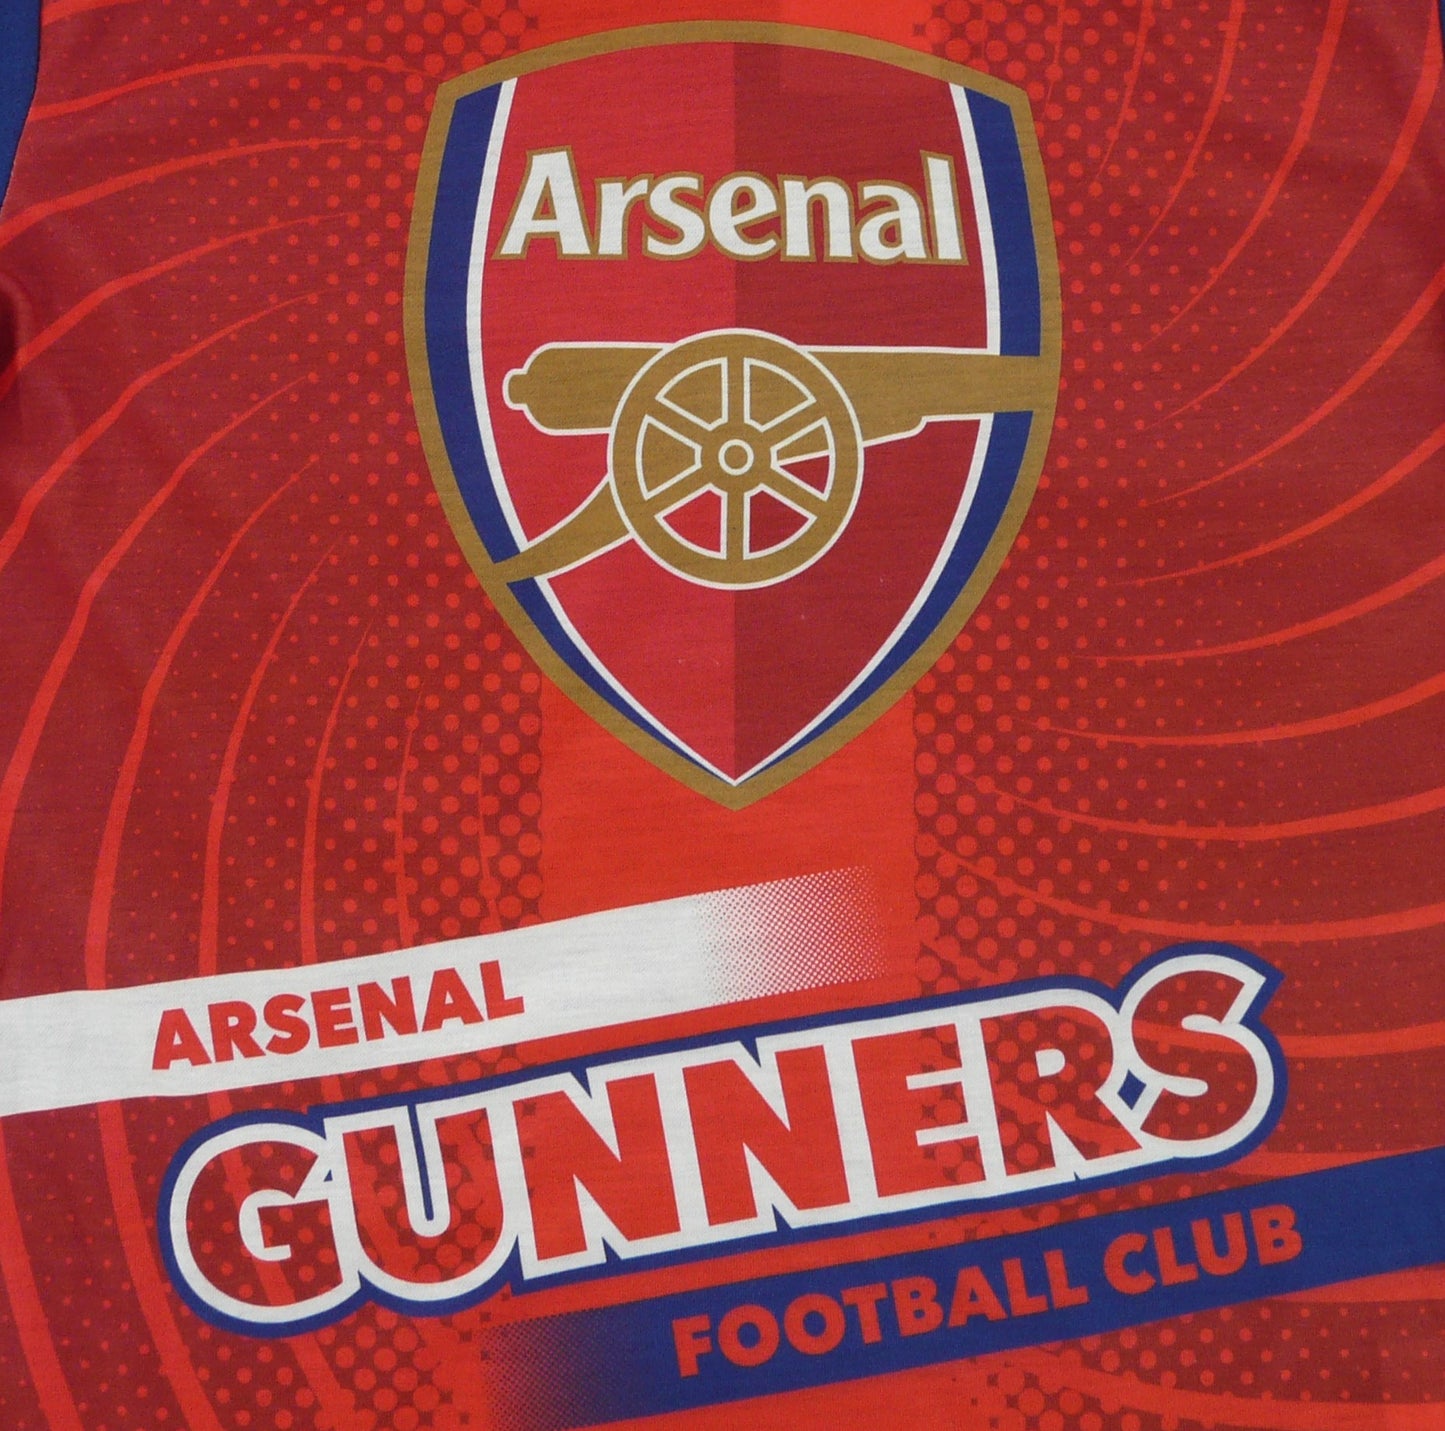 Arsenal Football Club "Gunners" Boys Pyjamas 3-12 Years Available